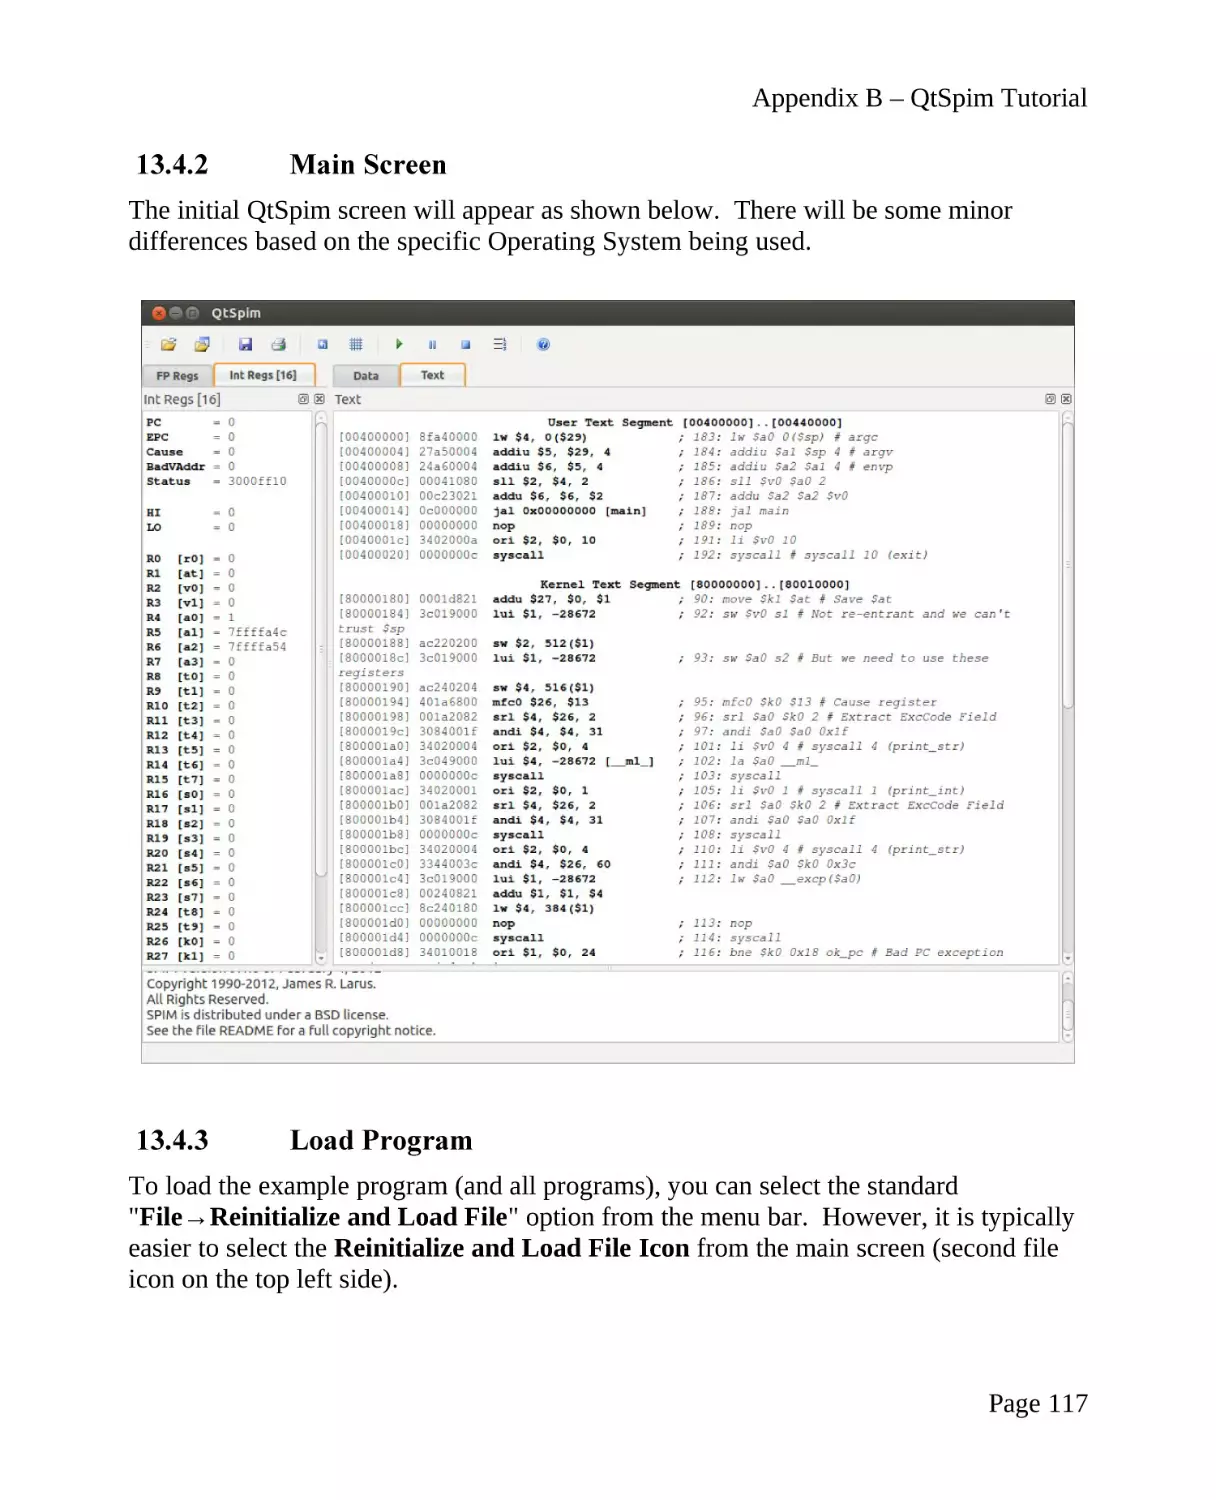 13.4.2 Main Screen
13.4.3 Load Program